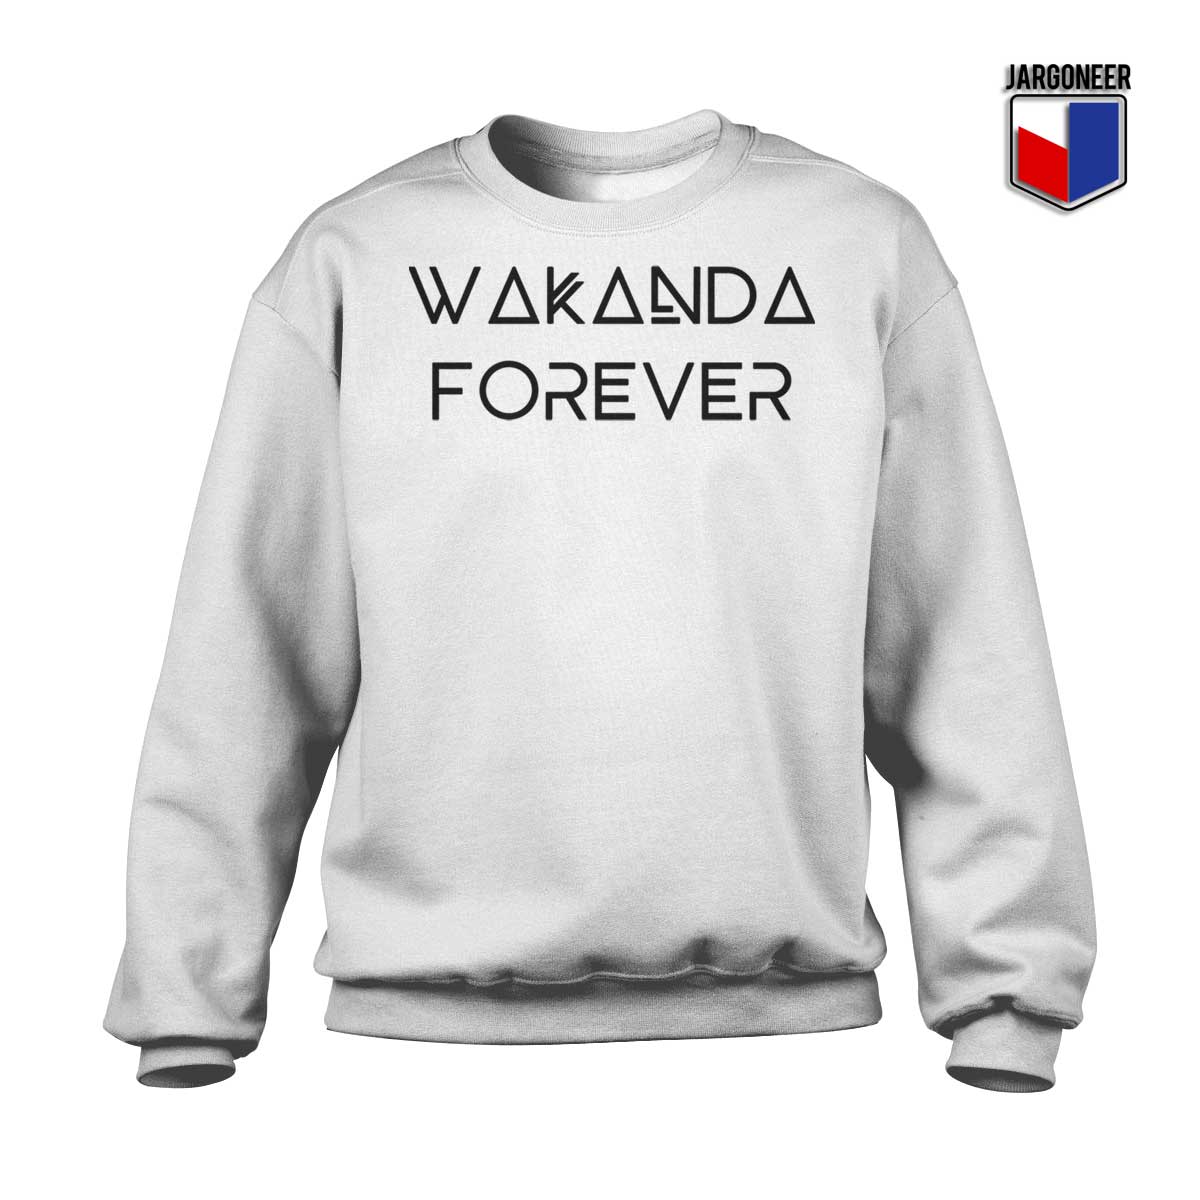 Wakanda Forever Sweatshirt - Shop Unique Graphic Cool Shirt Designs